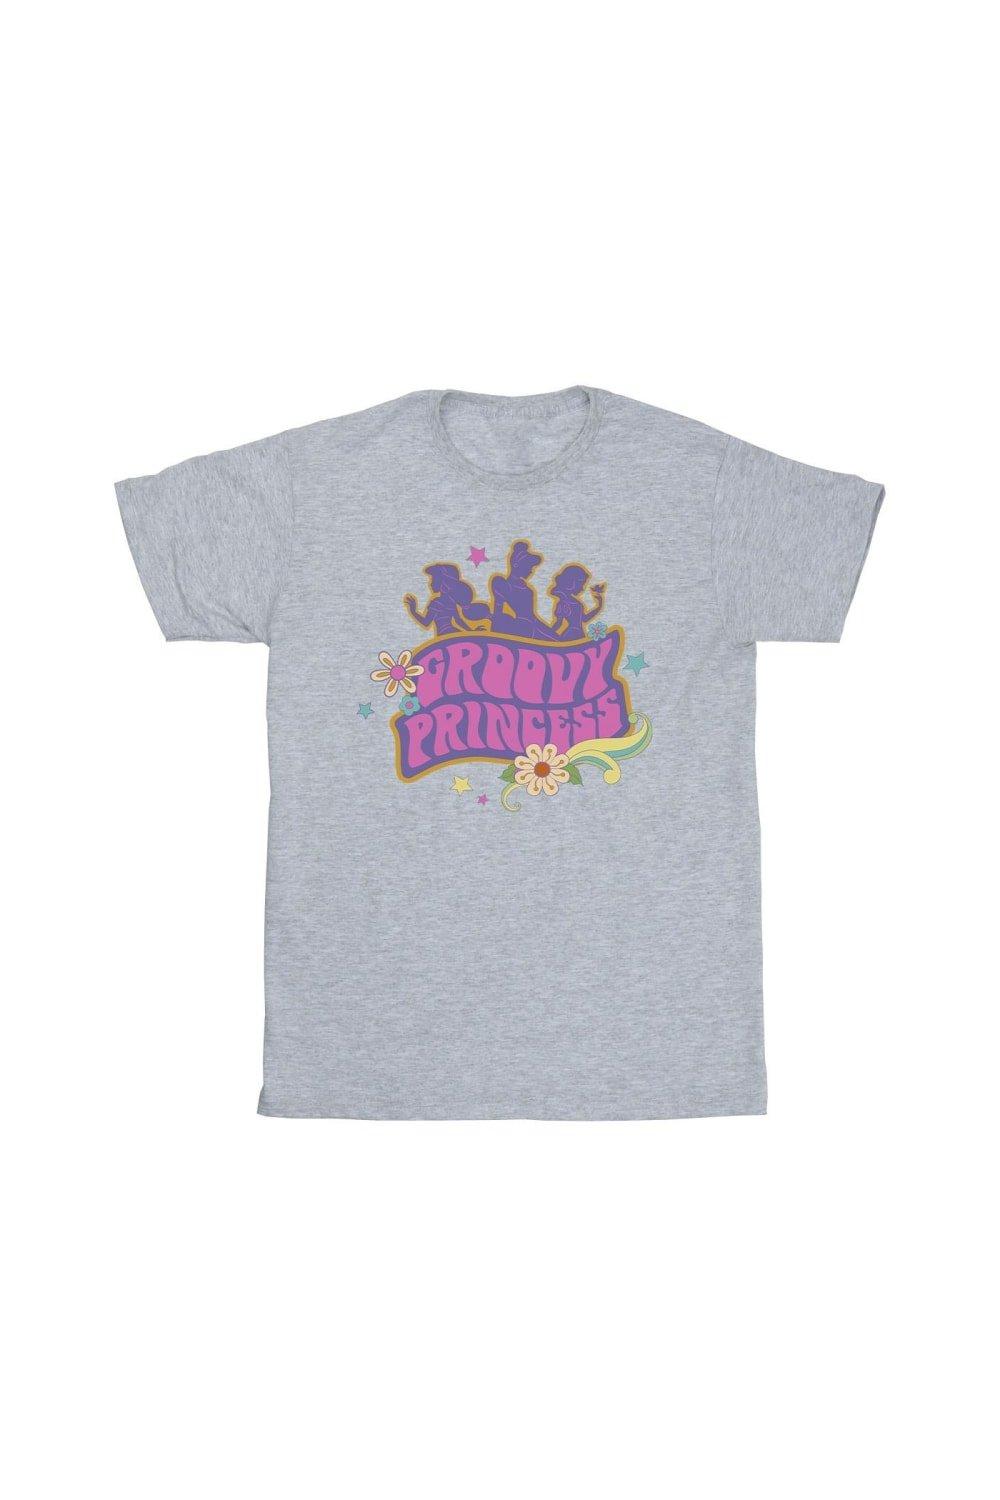 Хлопковая футболка Princesses Groovy Princess Disney, серый